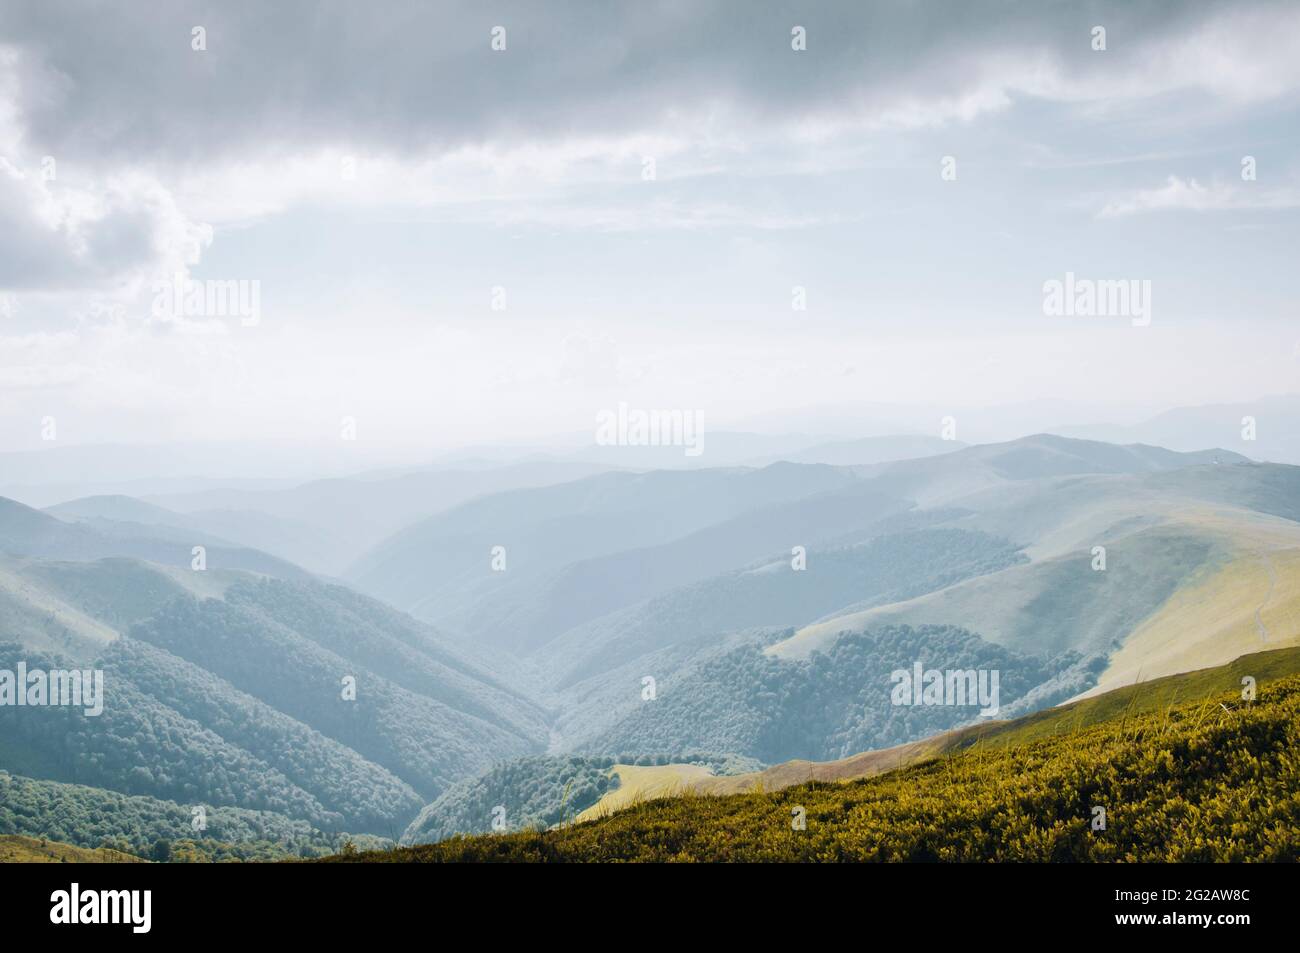 Carpathians, Ukraine: Polonina Borzava hightland lanscape view Stock Photo